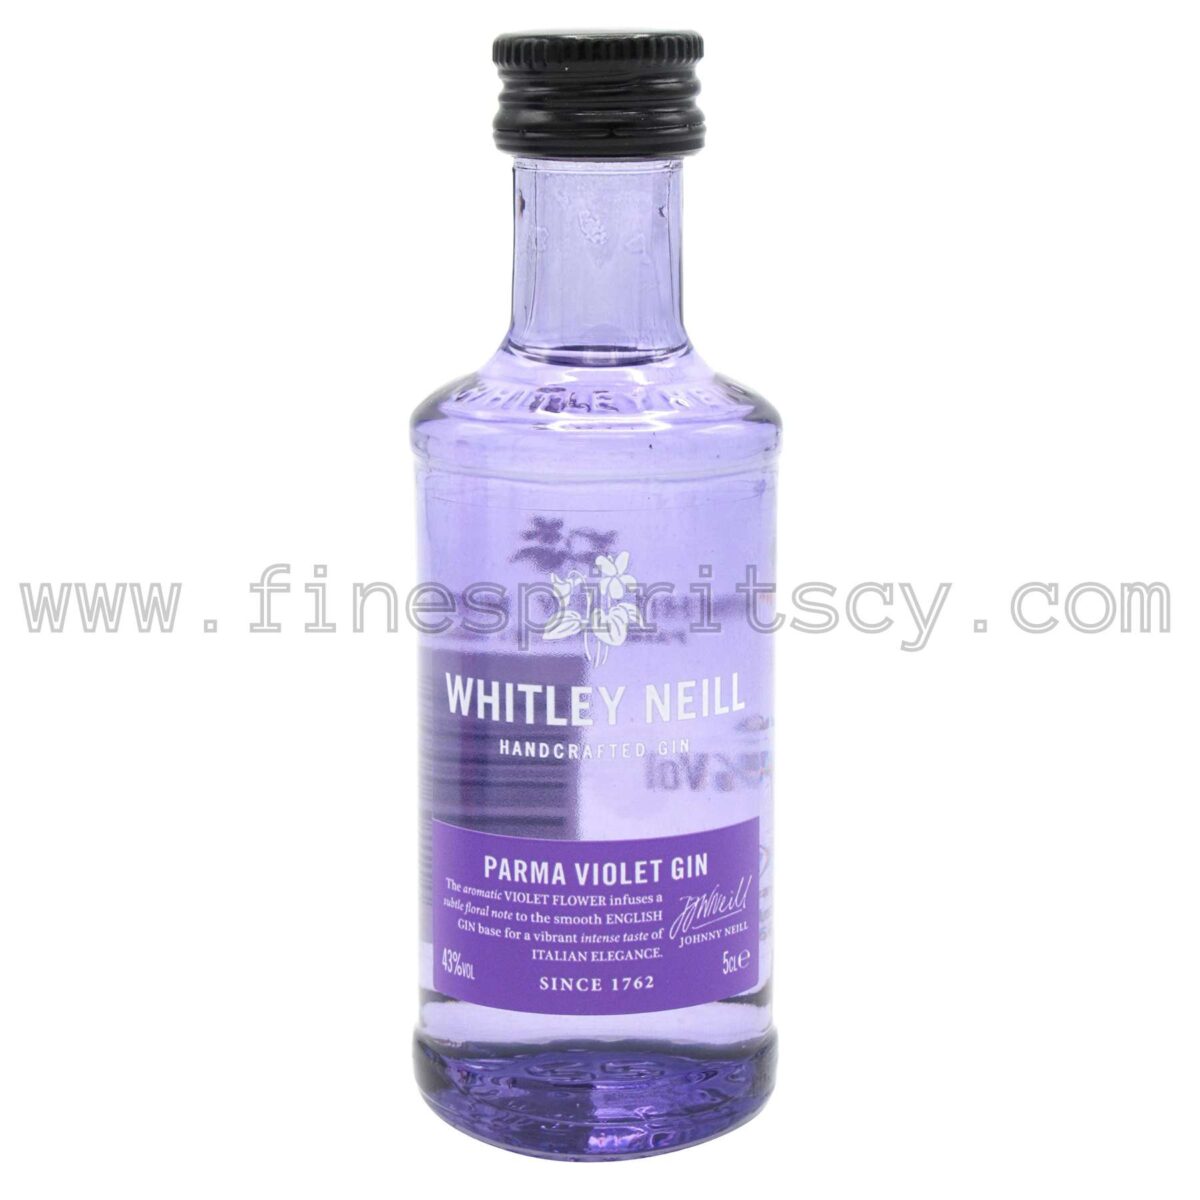 Whitley Neill Parma Violet Mini Miniature Gin 50ml 5cl Price Cyprus FSCY